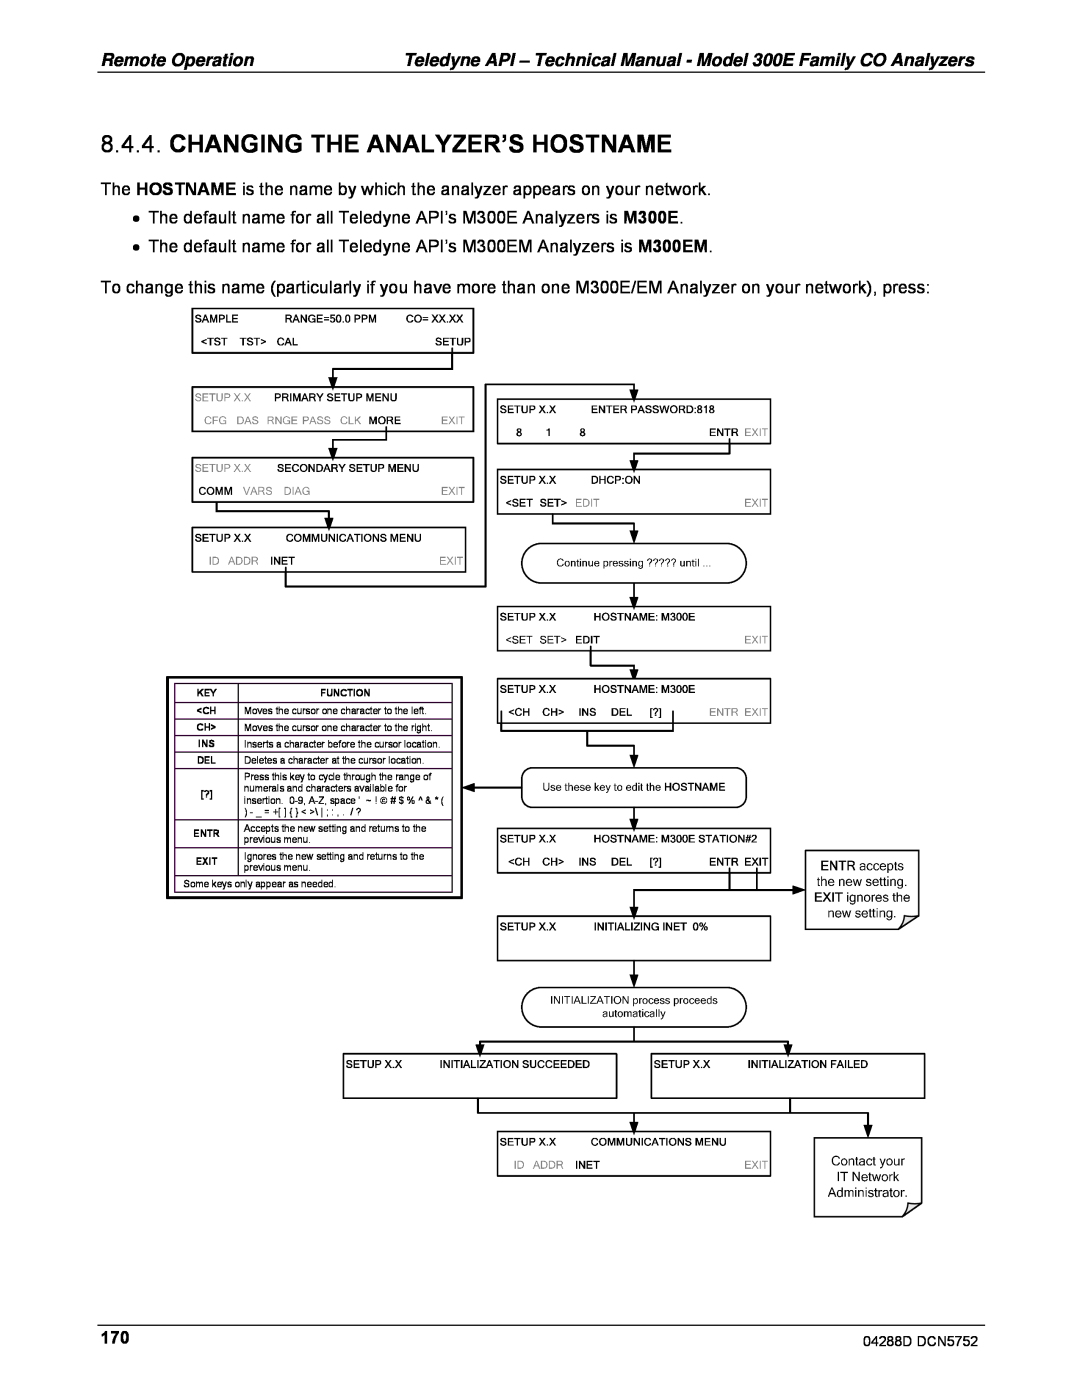 Teledyne M300EM operation manual Changing The Analyzer’S Hostname, Function, Entr, Exit 